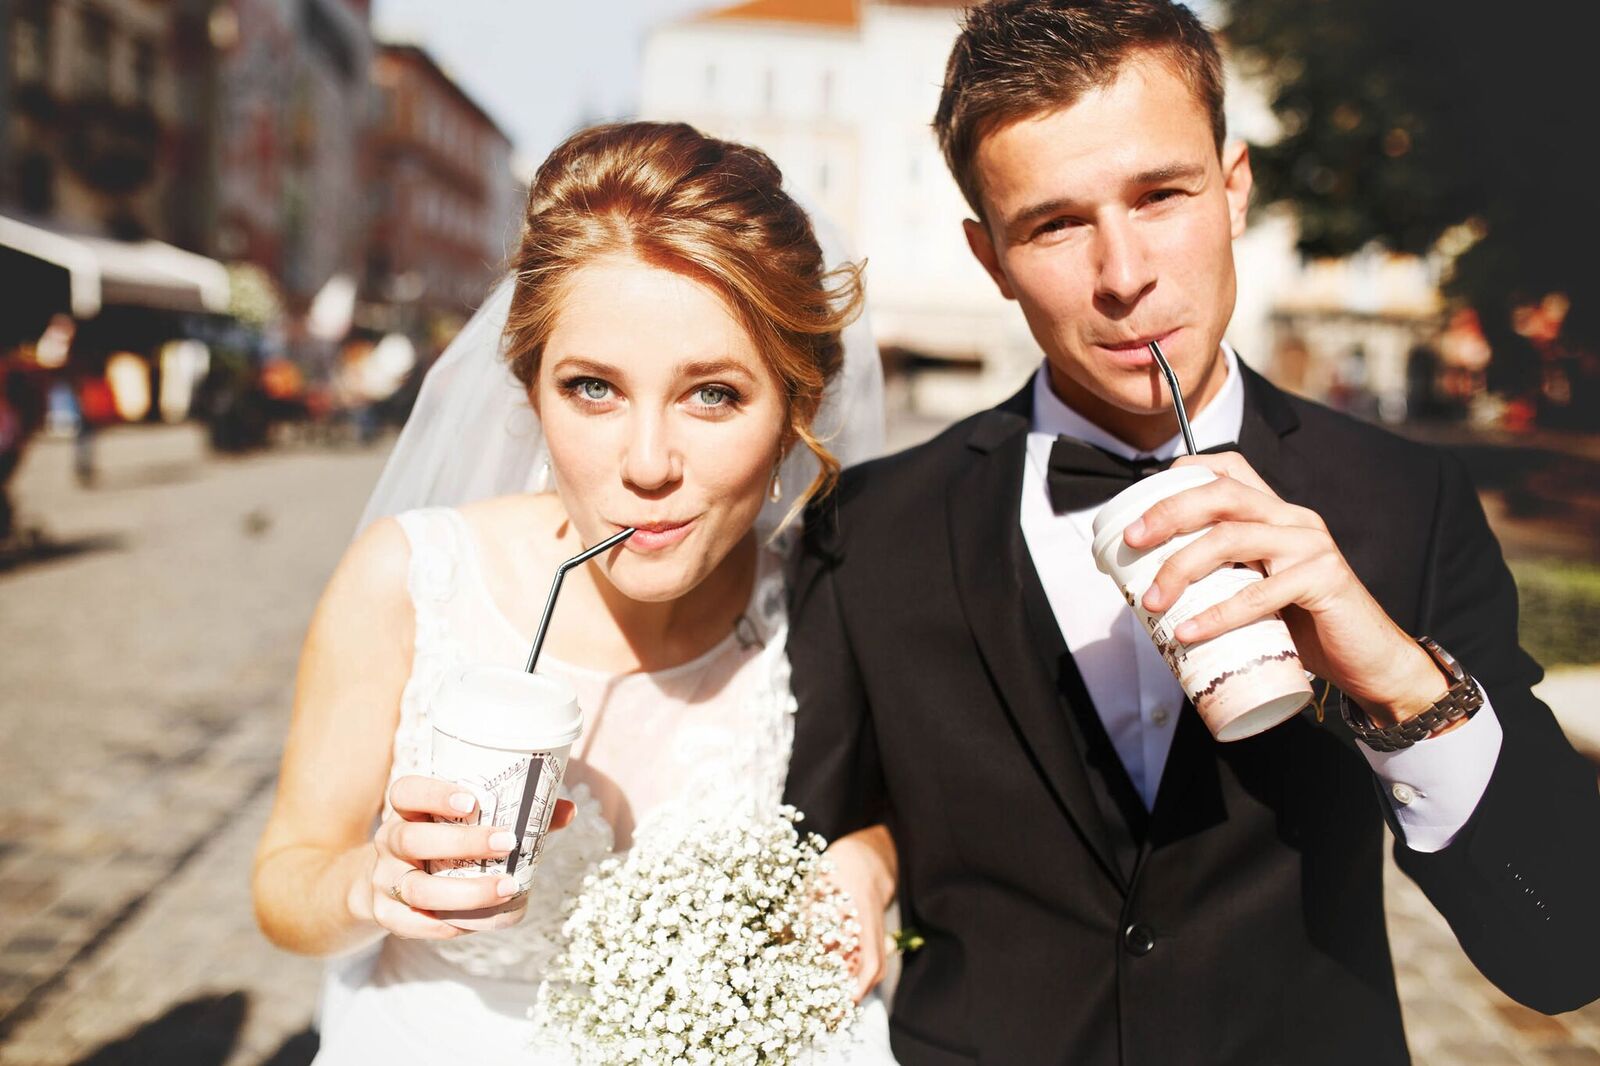 4 Killer SEO Content Tips for Wedding Professionals